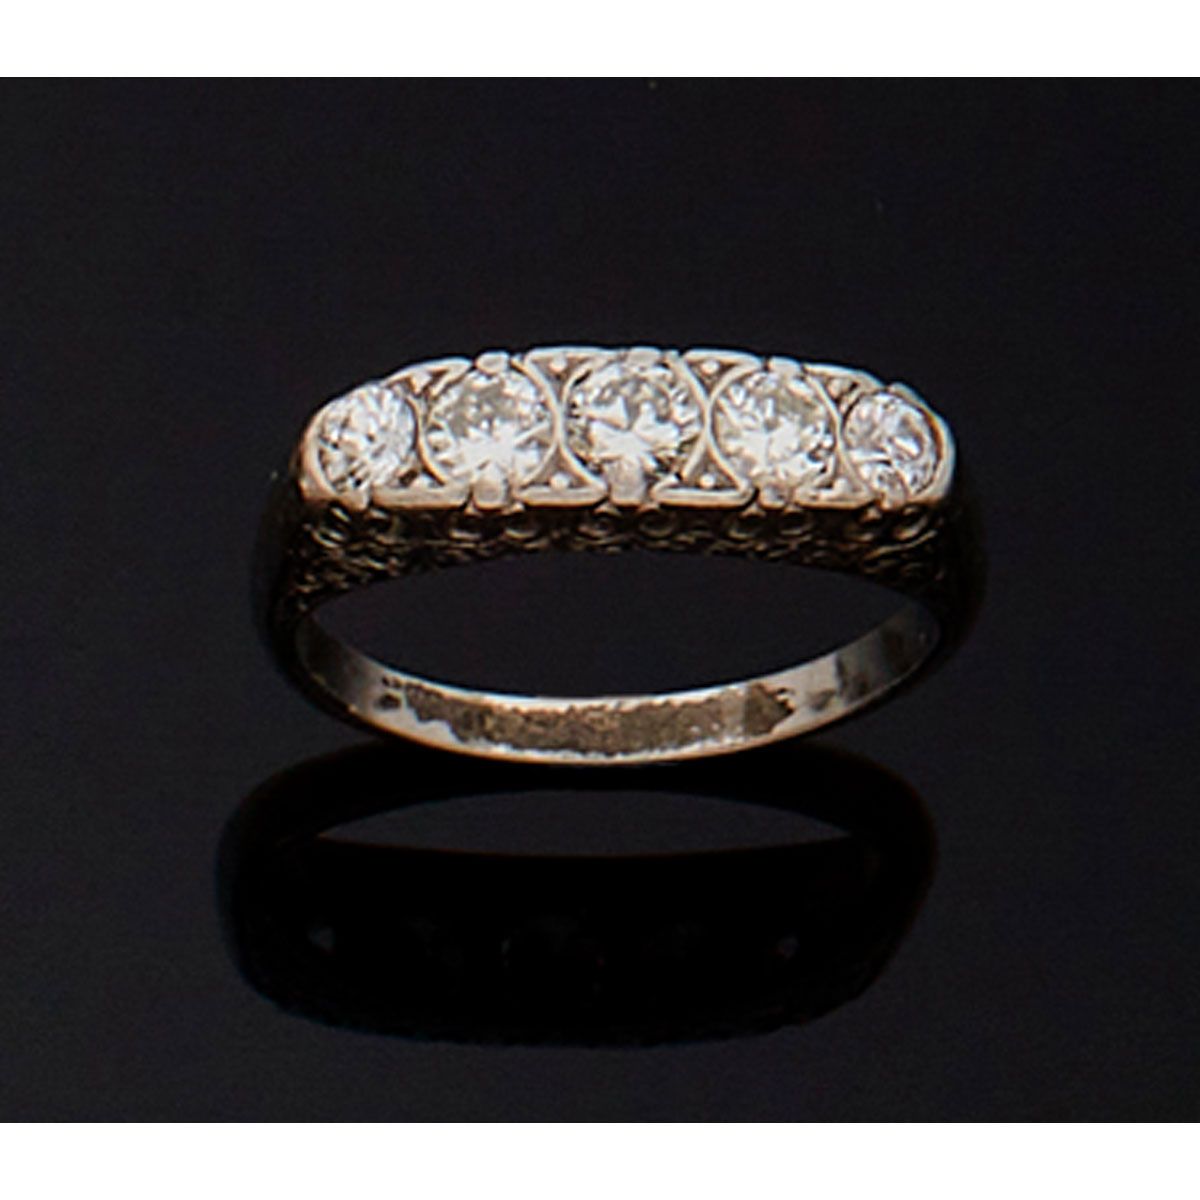 Null 800毫米的铂金 "吊袜带 "戒指，镶嵌着五颗老式切割钻石。

B.P. 5.9克。- TDD 53